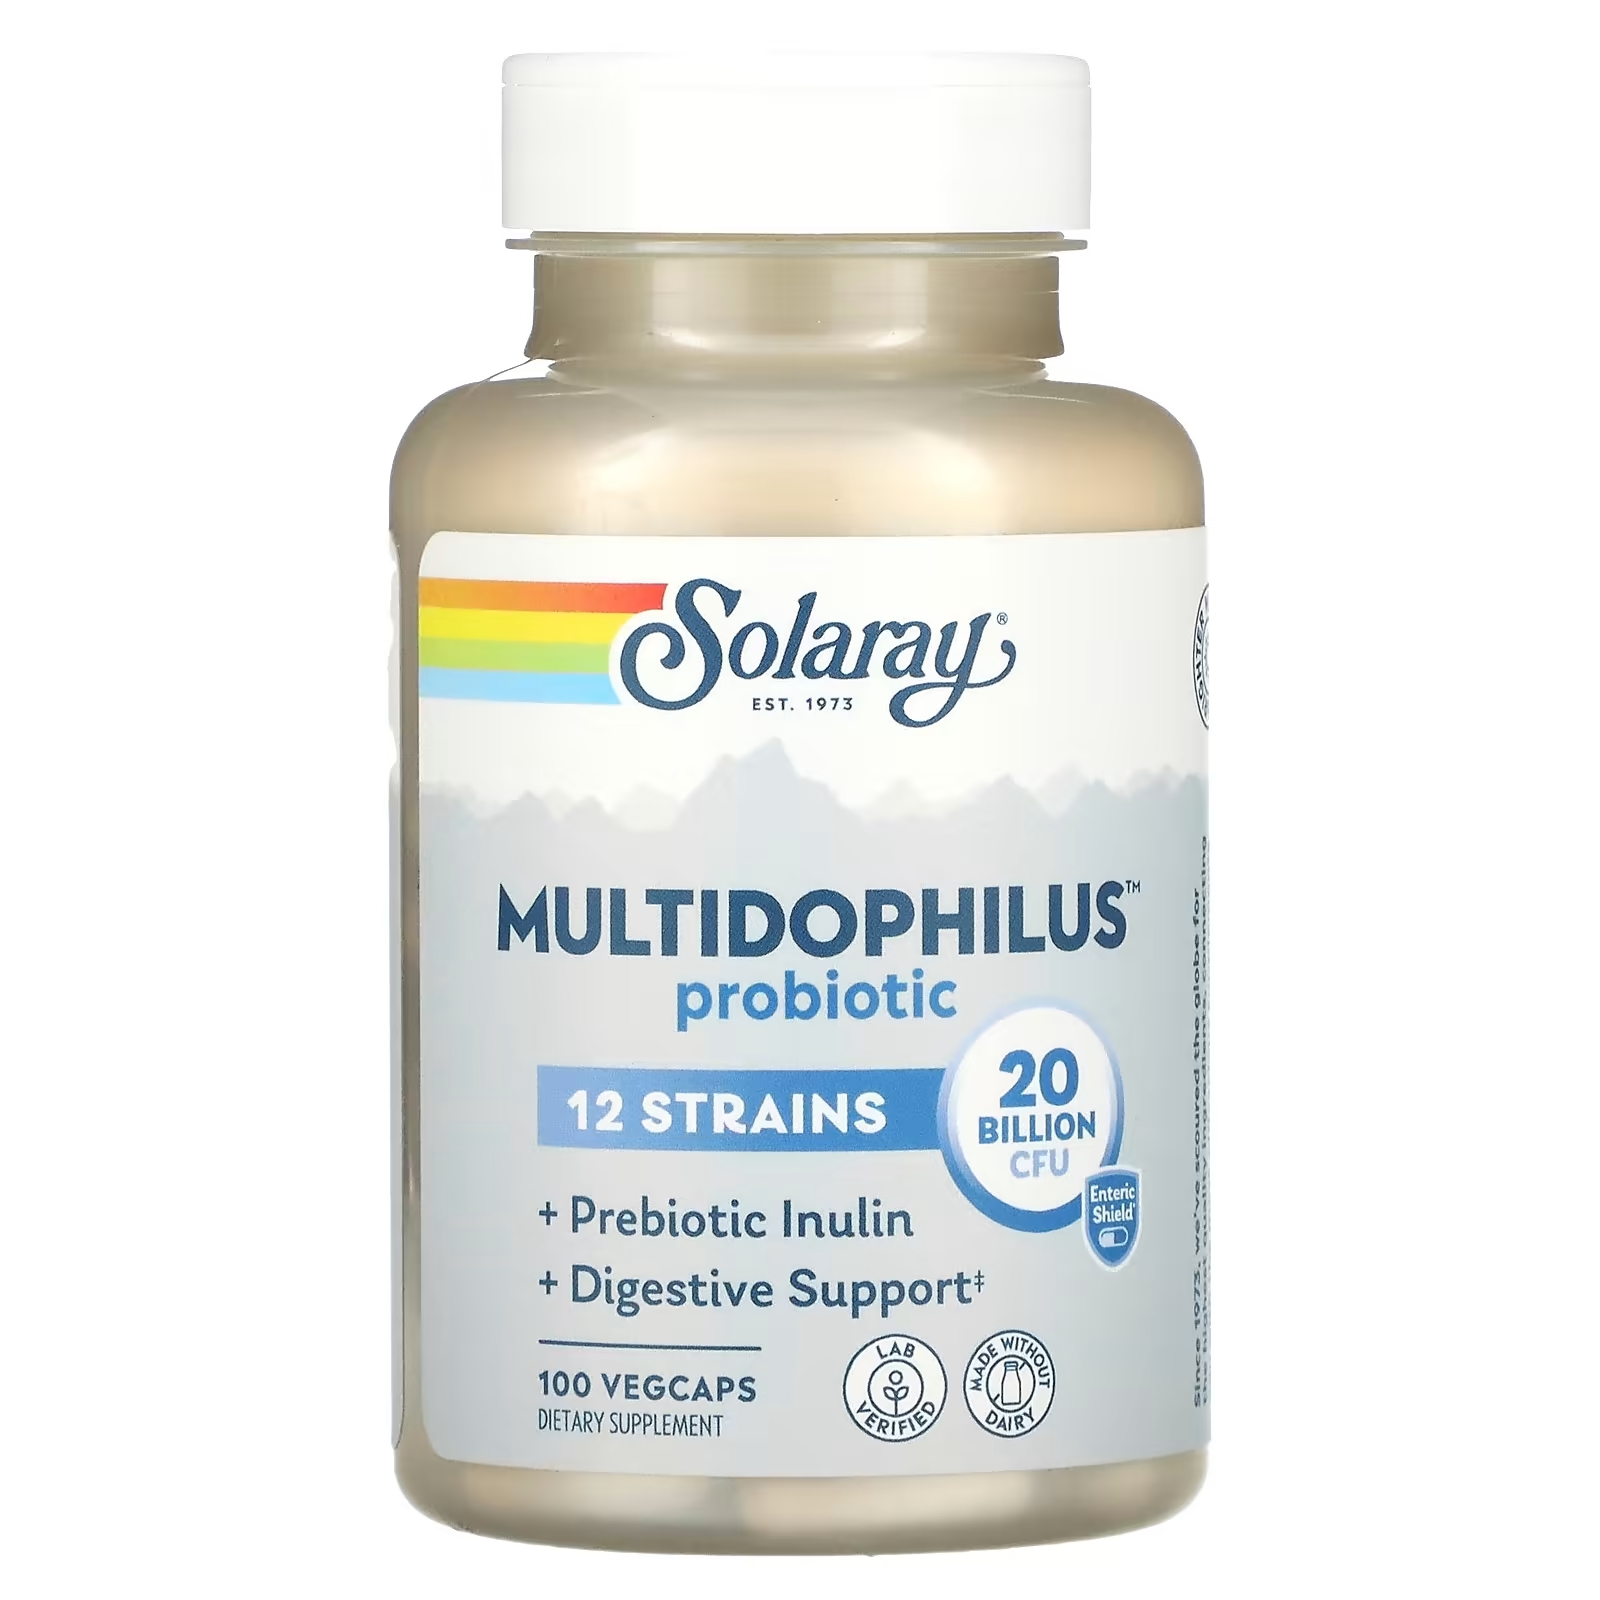 Solaray Multidophilus Probiotic пробиотик 20 млрд КОЕ, 100 вегетарианских капсул VegCaps пробиотик solaray multidophilus 20 миллиардов кое 50 растительных капсул